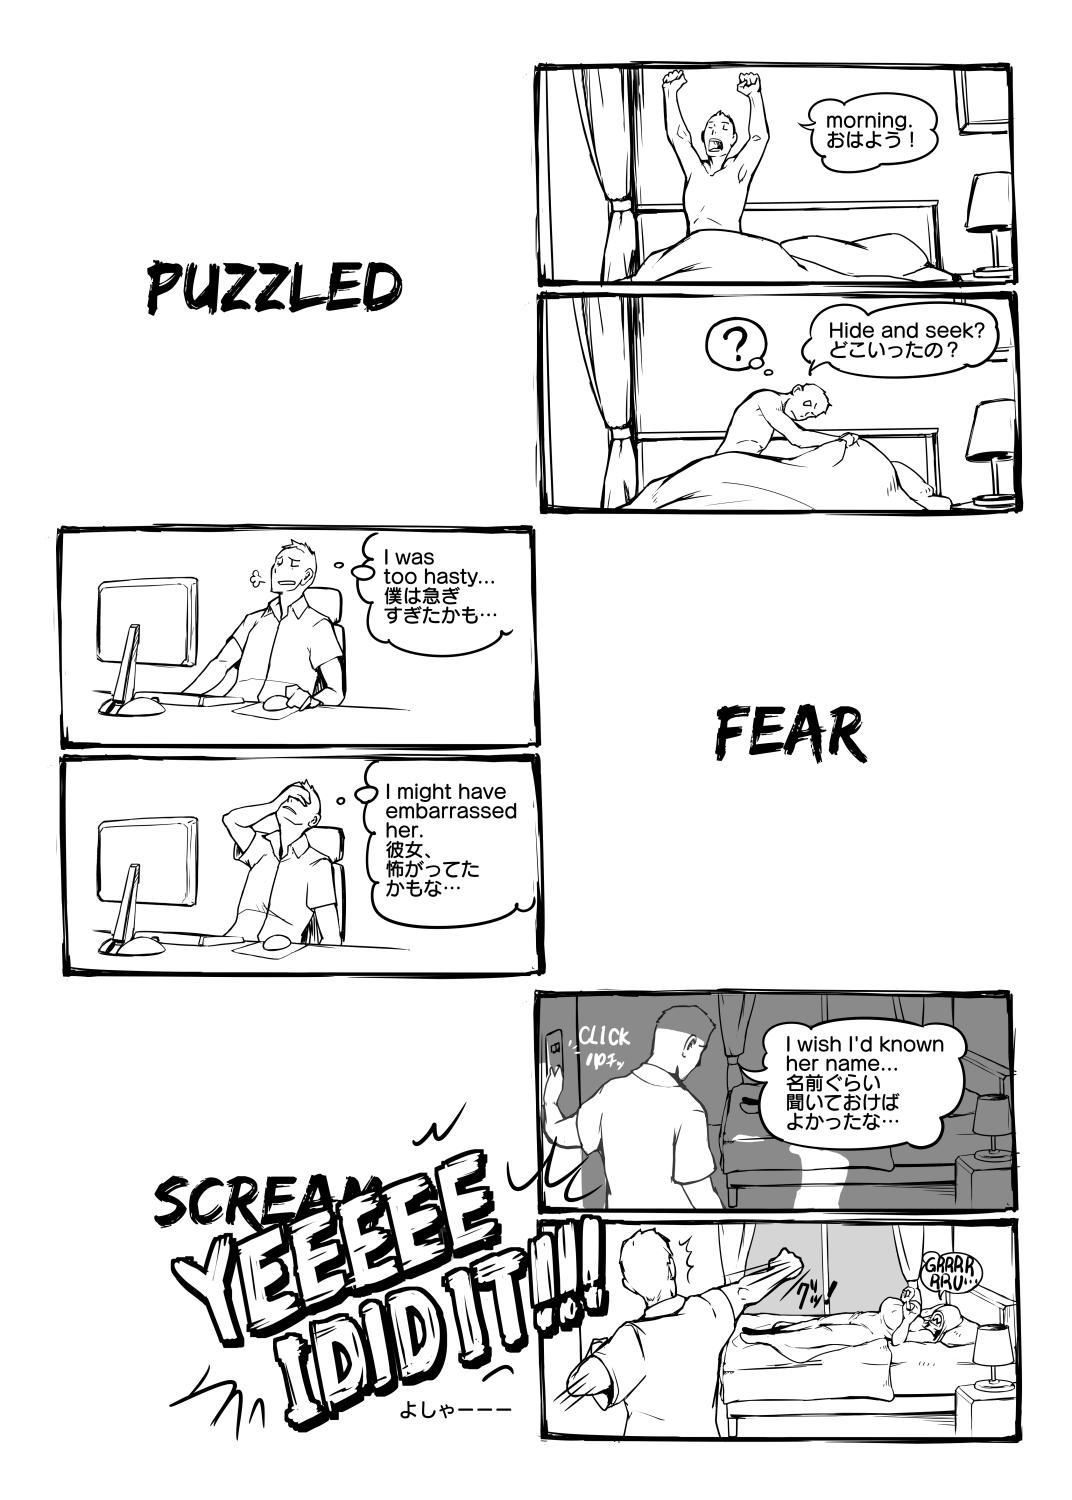 Fear and Scream 3